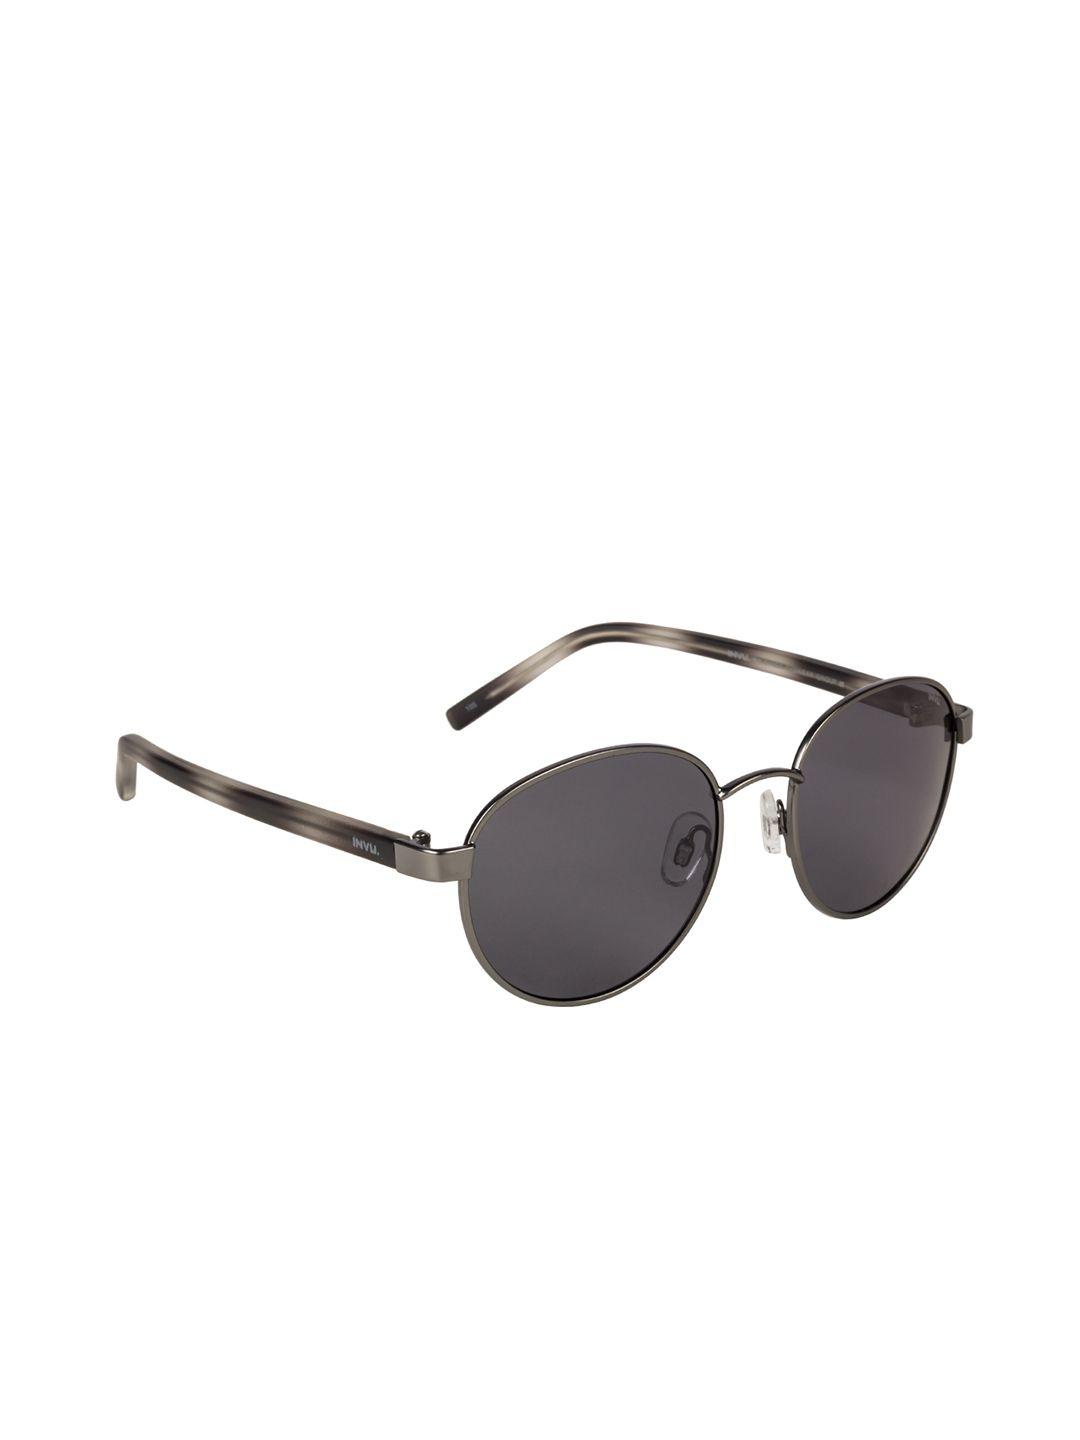 invu unisex oval sunglasses b1601b